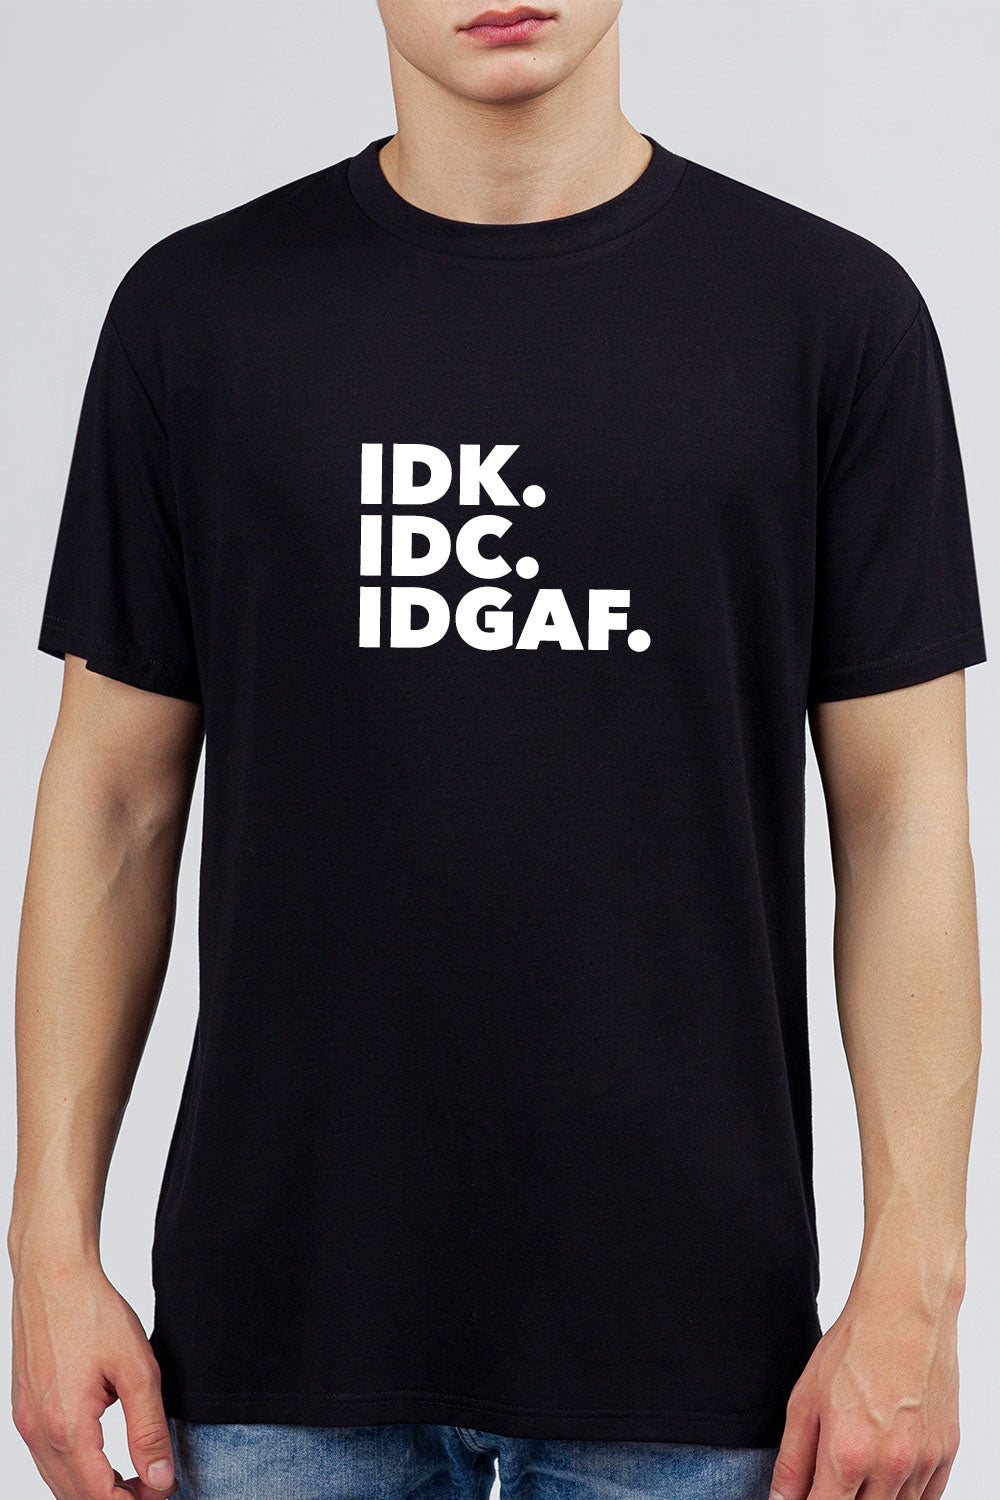 IDK. IDC. IDGAF. - Attitude Tee - Black printed Pure Cotton